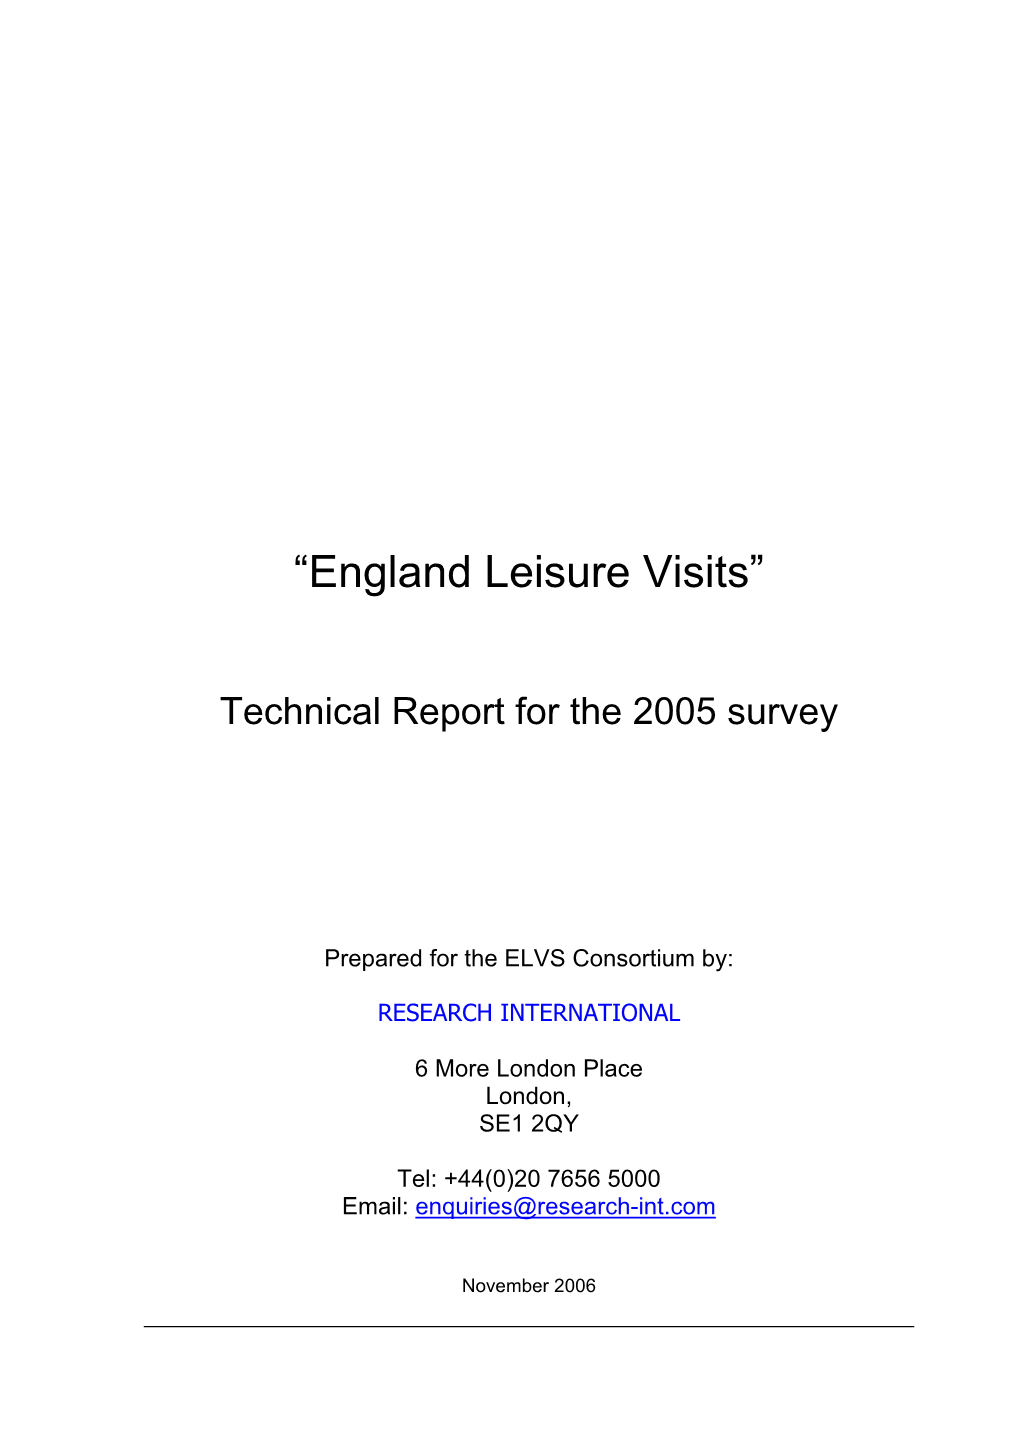 ELVS 2005 Technical Report